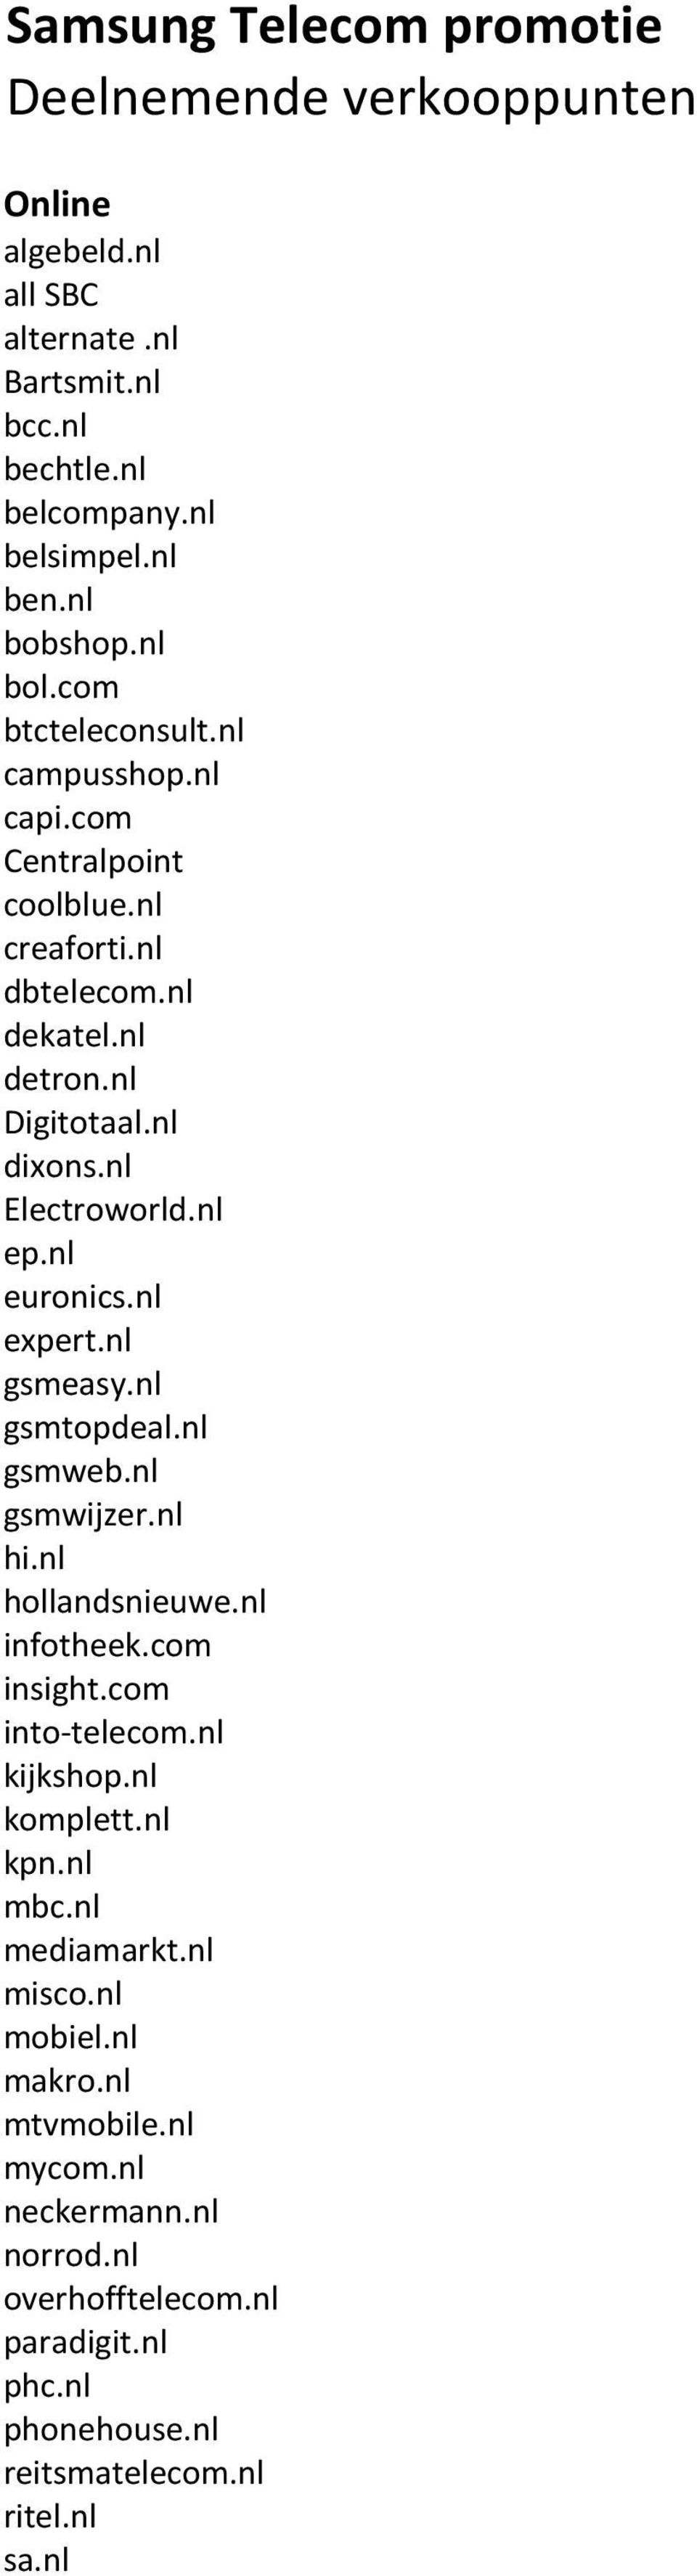 nl euronics.nl expert.nl gsmeasy.nl gsmtopdeal.nl gsmweb.nl gsmwijzer.nl hi.nl hollandsnieuwe.nl infotheek.com insight.com into-telecom.nl kijkshop.nl komplett.nl kpn.